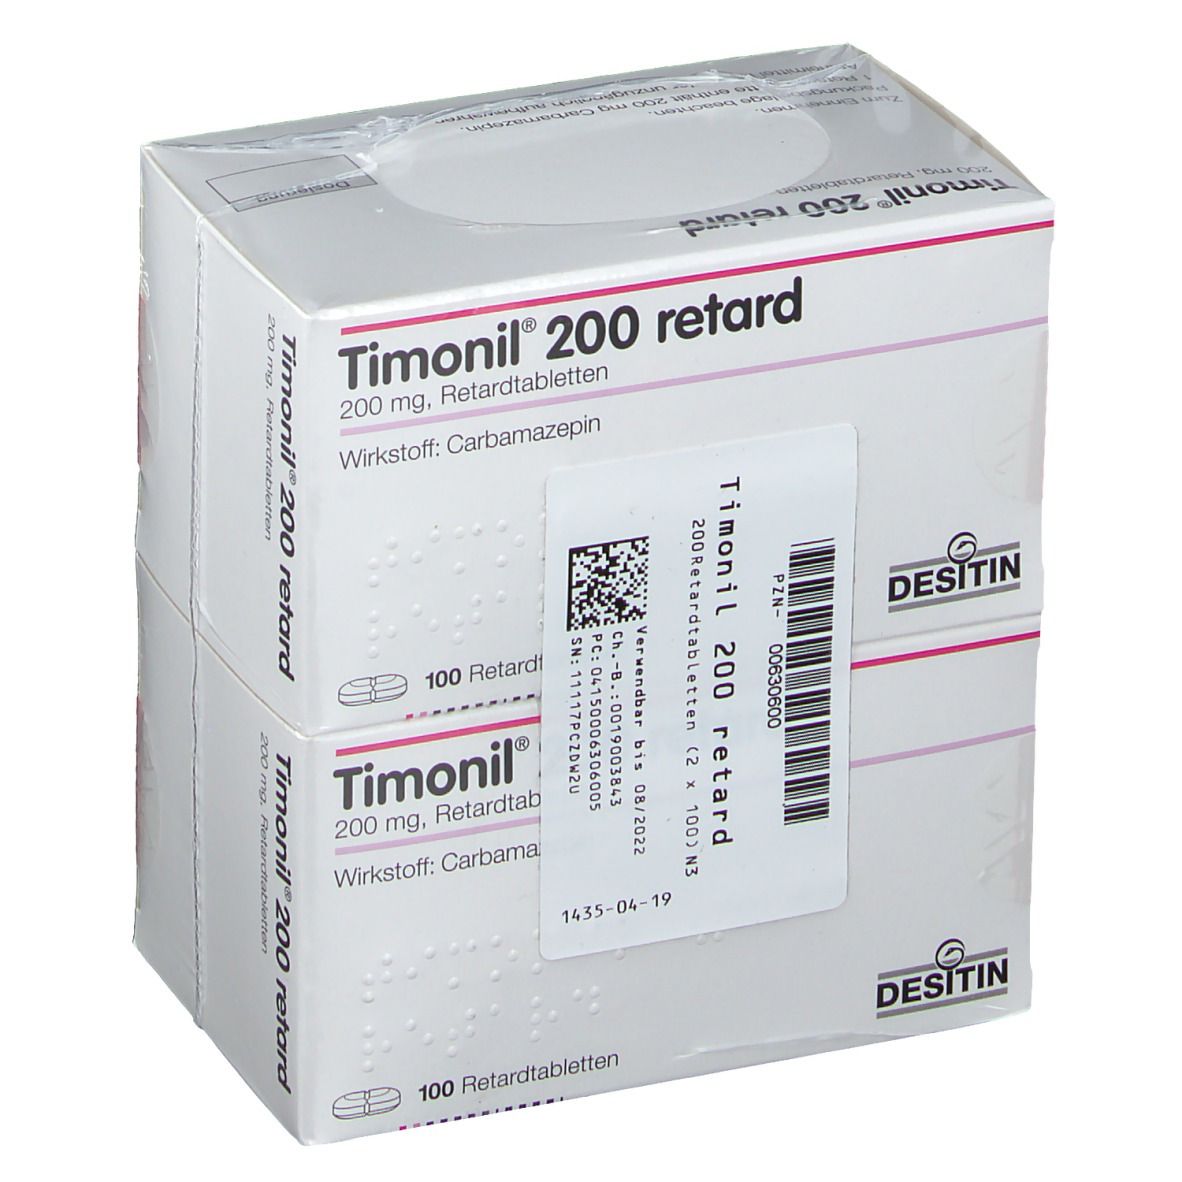 Timonil® 200 retard